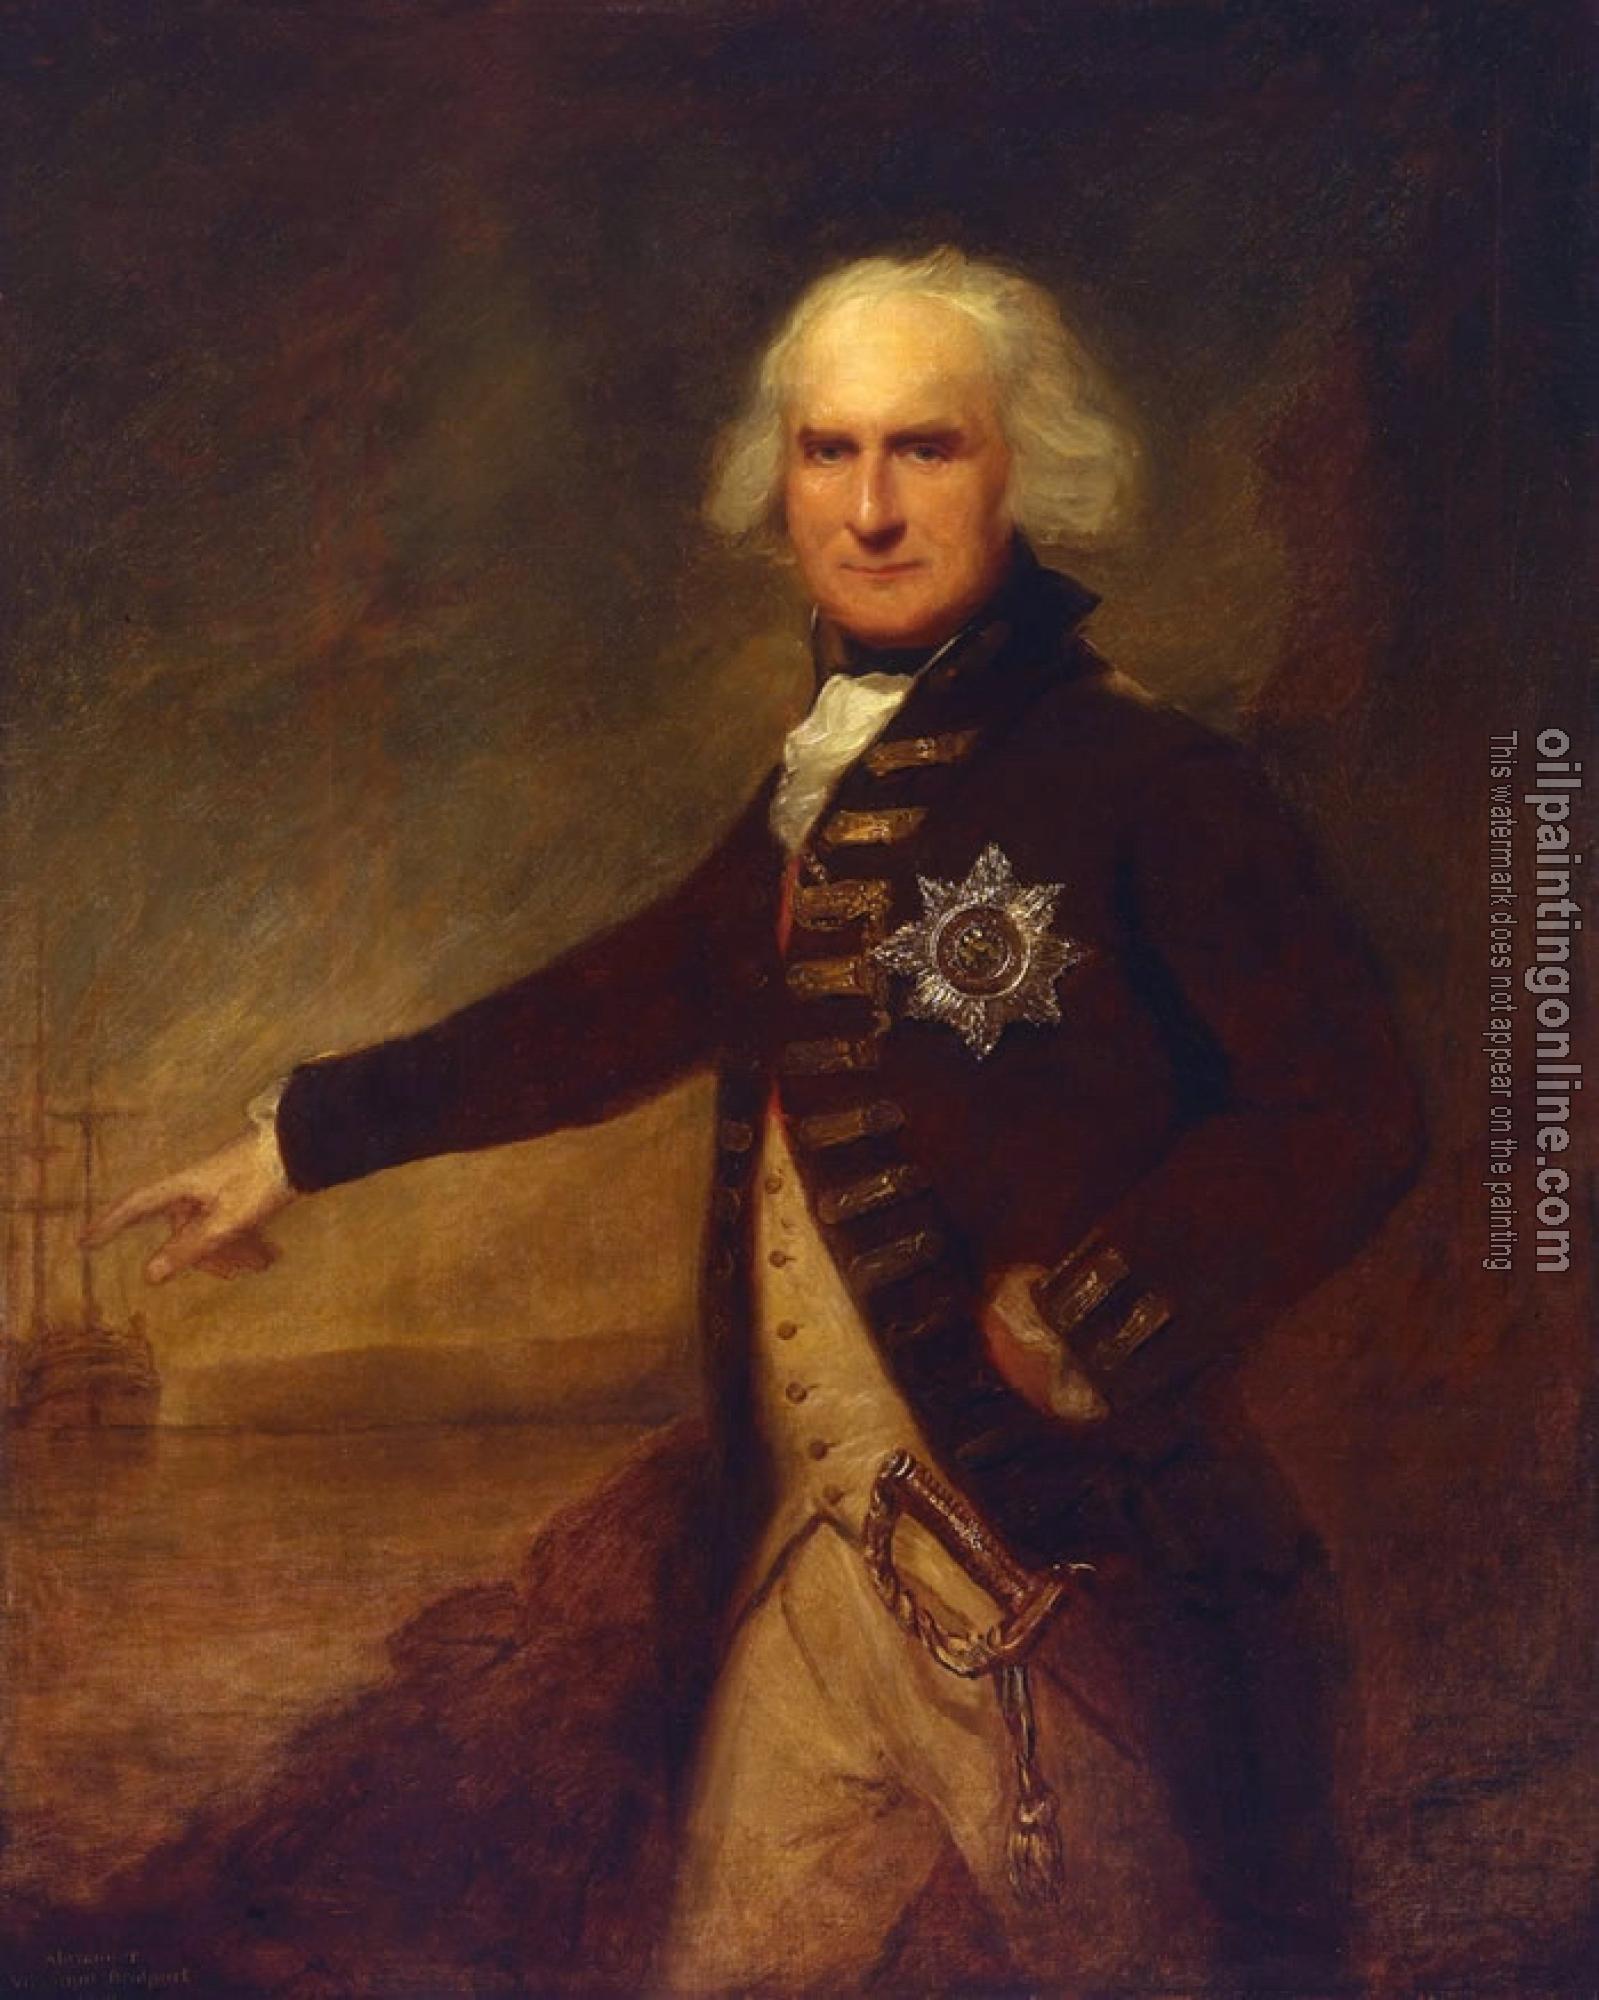 Abbott, Lemuel Francis - Admiral Alexander Hood, 1727-1814, 1st Viscount Bridport